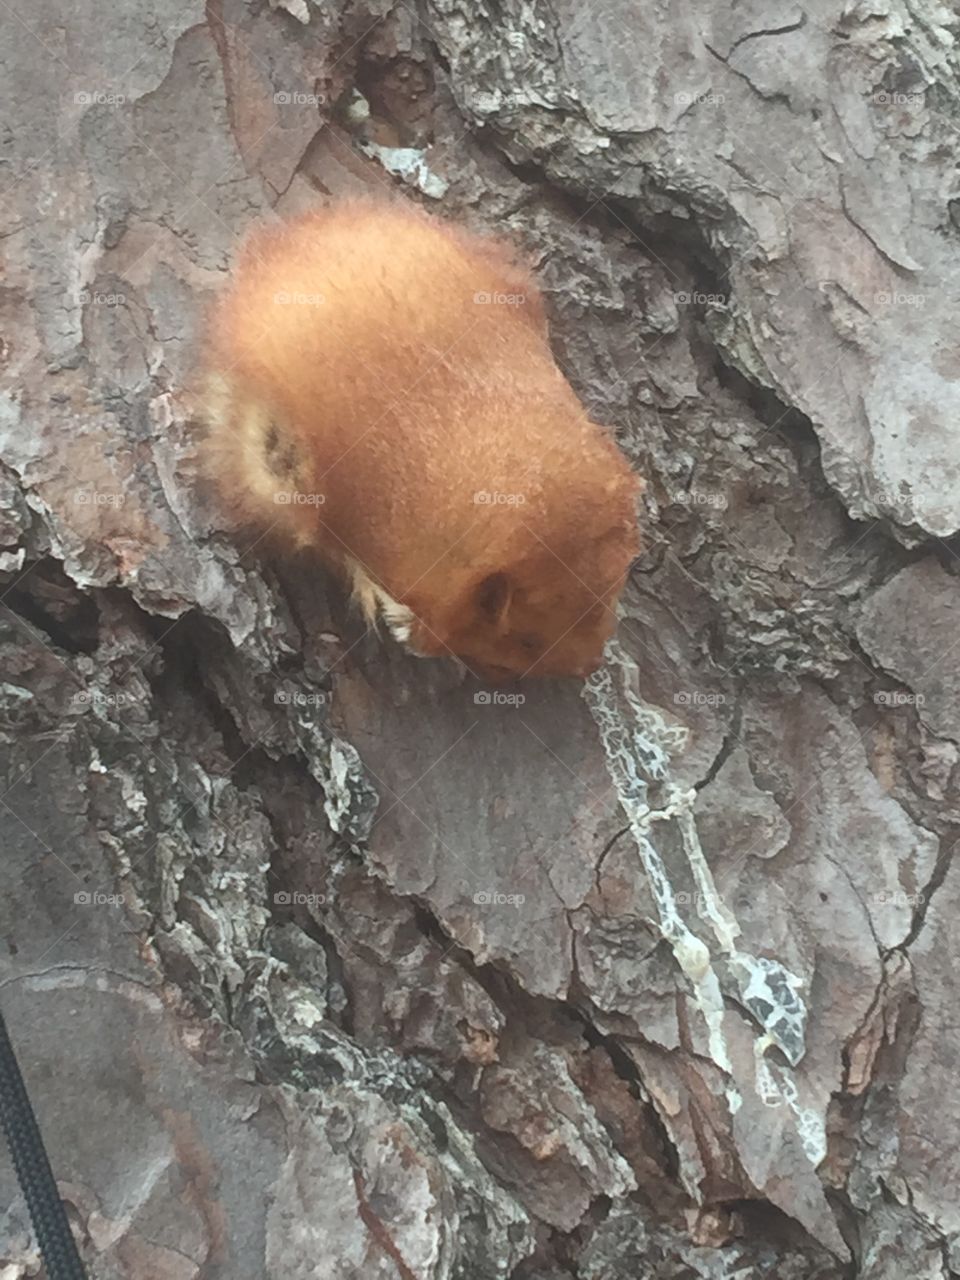 Fuzzy bat on a tree